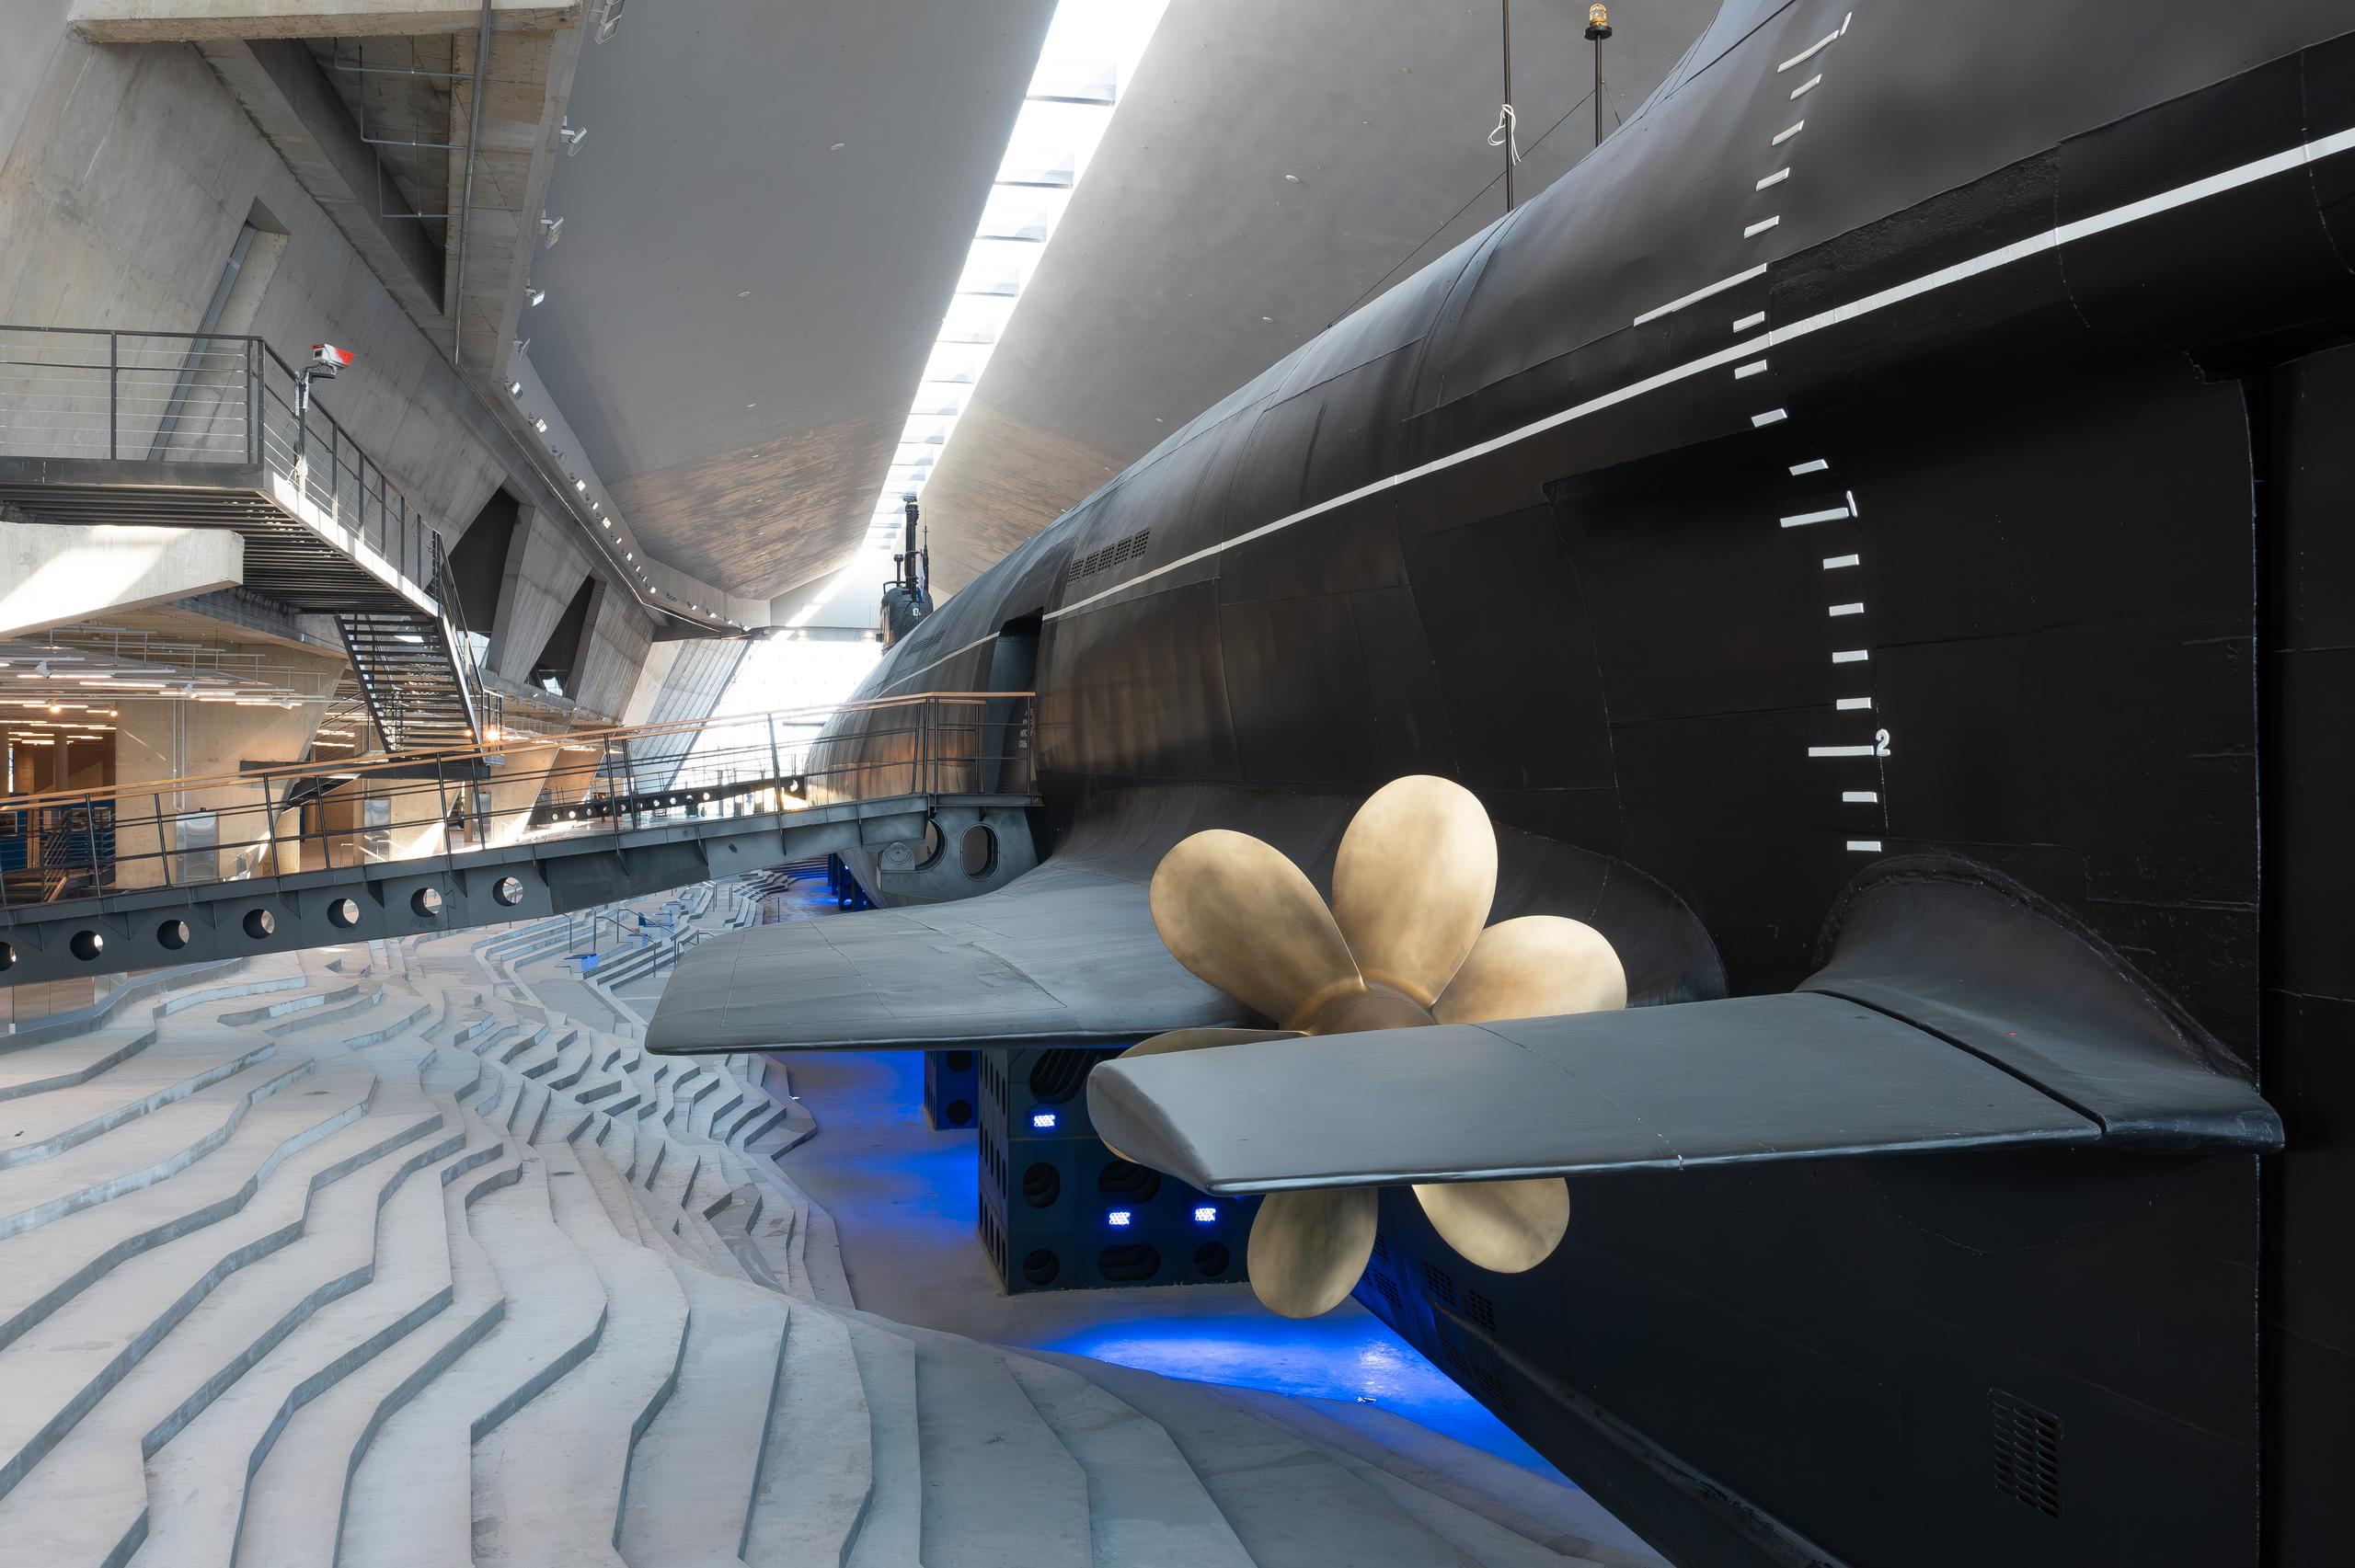 K-3 submarine as an exhibit